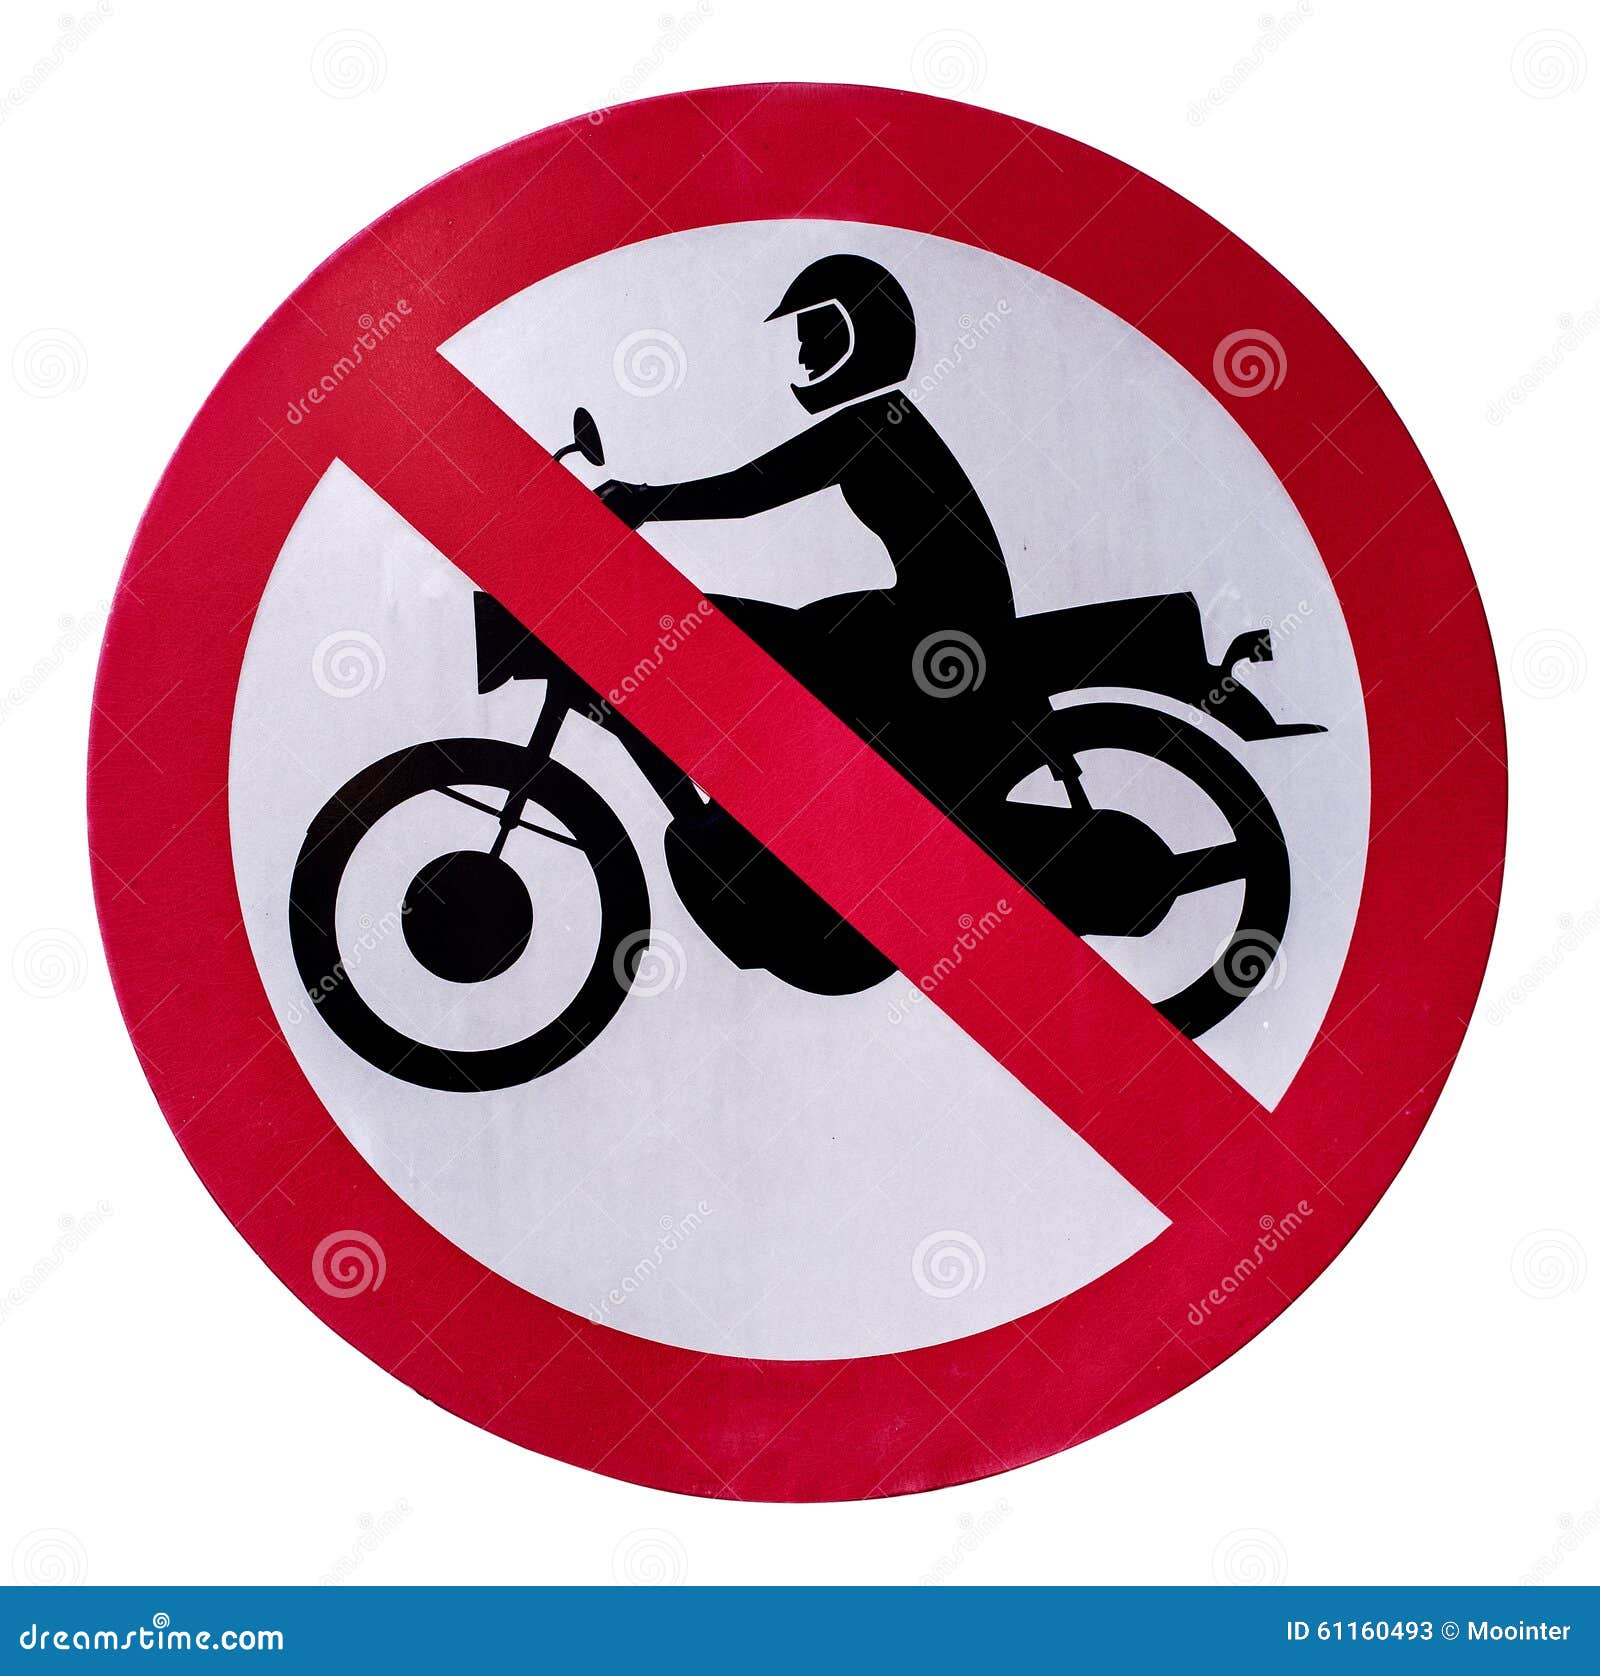 Знак мотоцикл в круге. Дорожный знак мотоцикл. Знак запрета мотоциклов. Знак зачёркнутый мотоцикл. Круглый знак с мотоциклом.